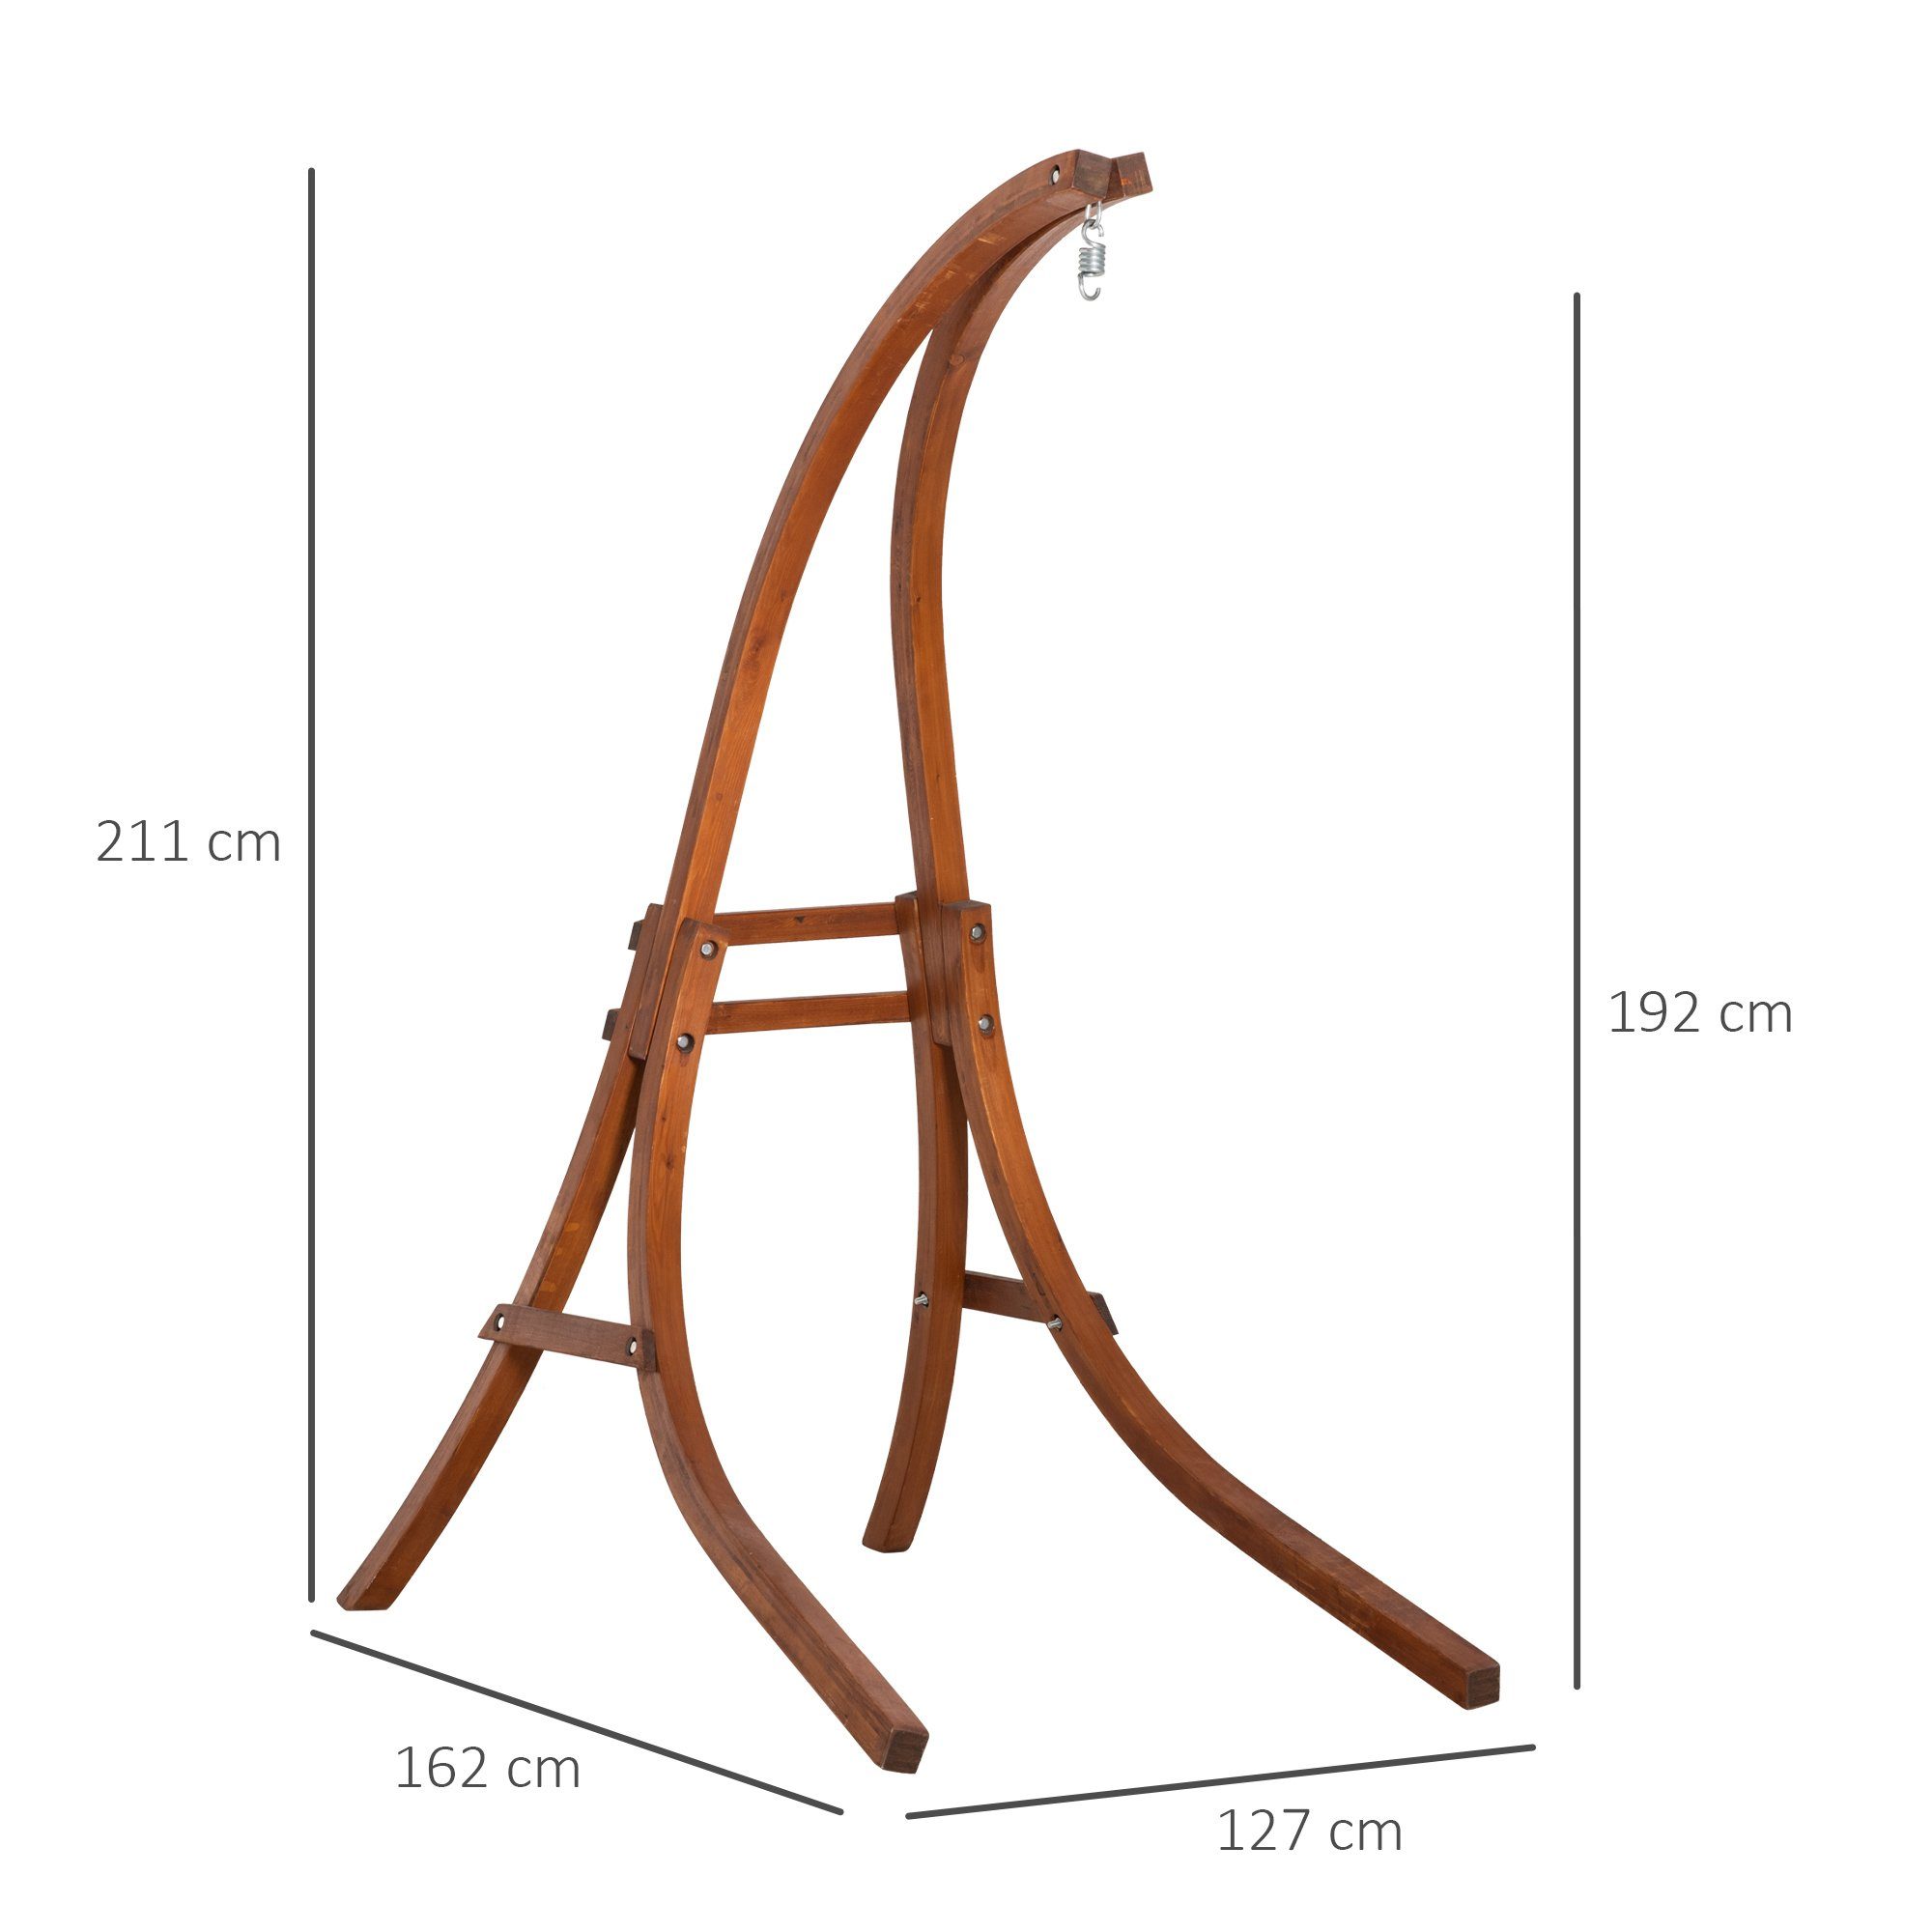 Natur Ständer max. Lärchenholz Hängemattenstuhl Hängematte kg Ständer, 120 Hängestuhl Outsunny Hängestuhlgestell aus